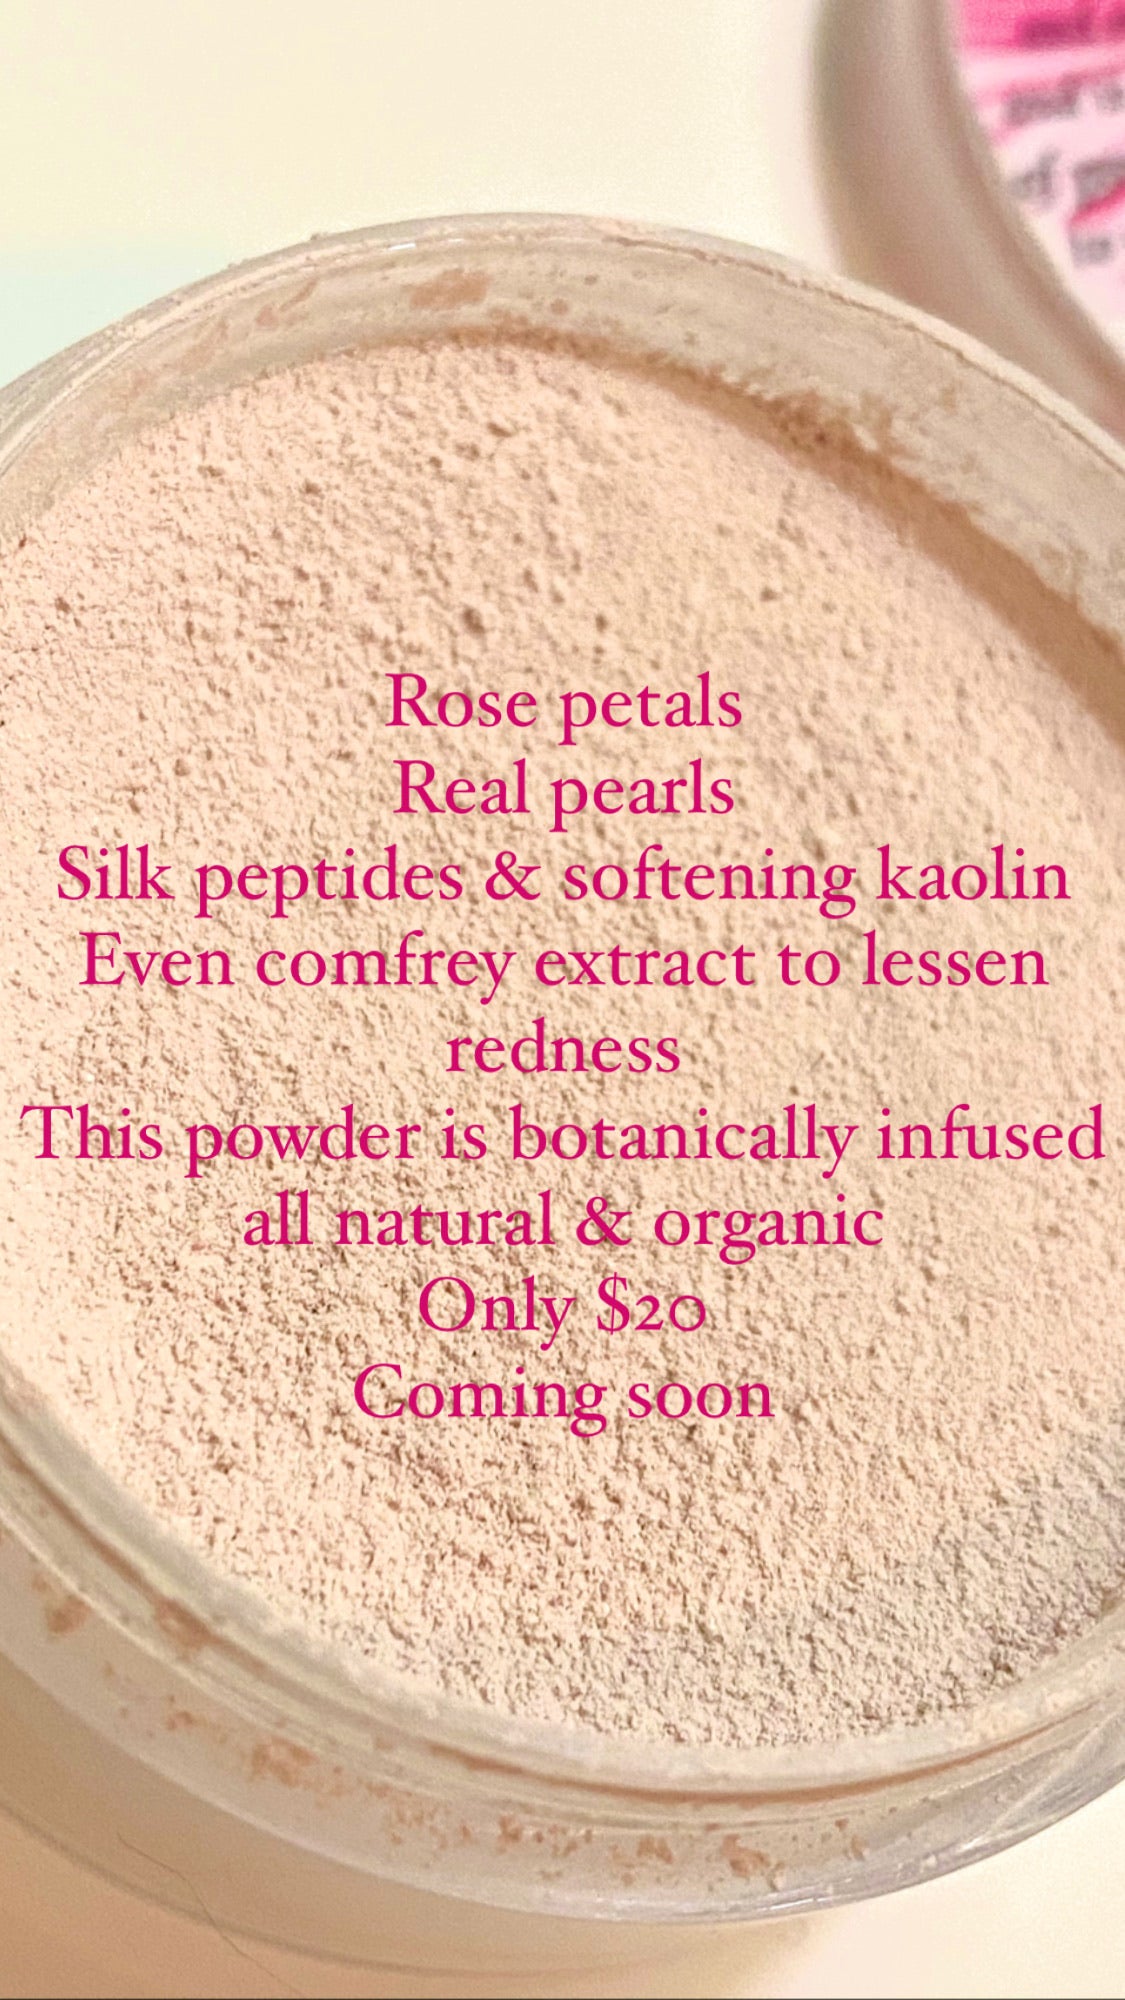 Rose Petal and Pearl Corrective Face Powder